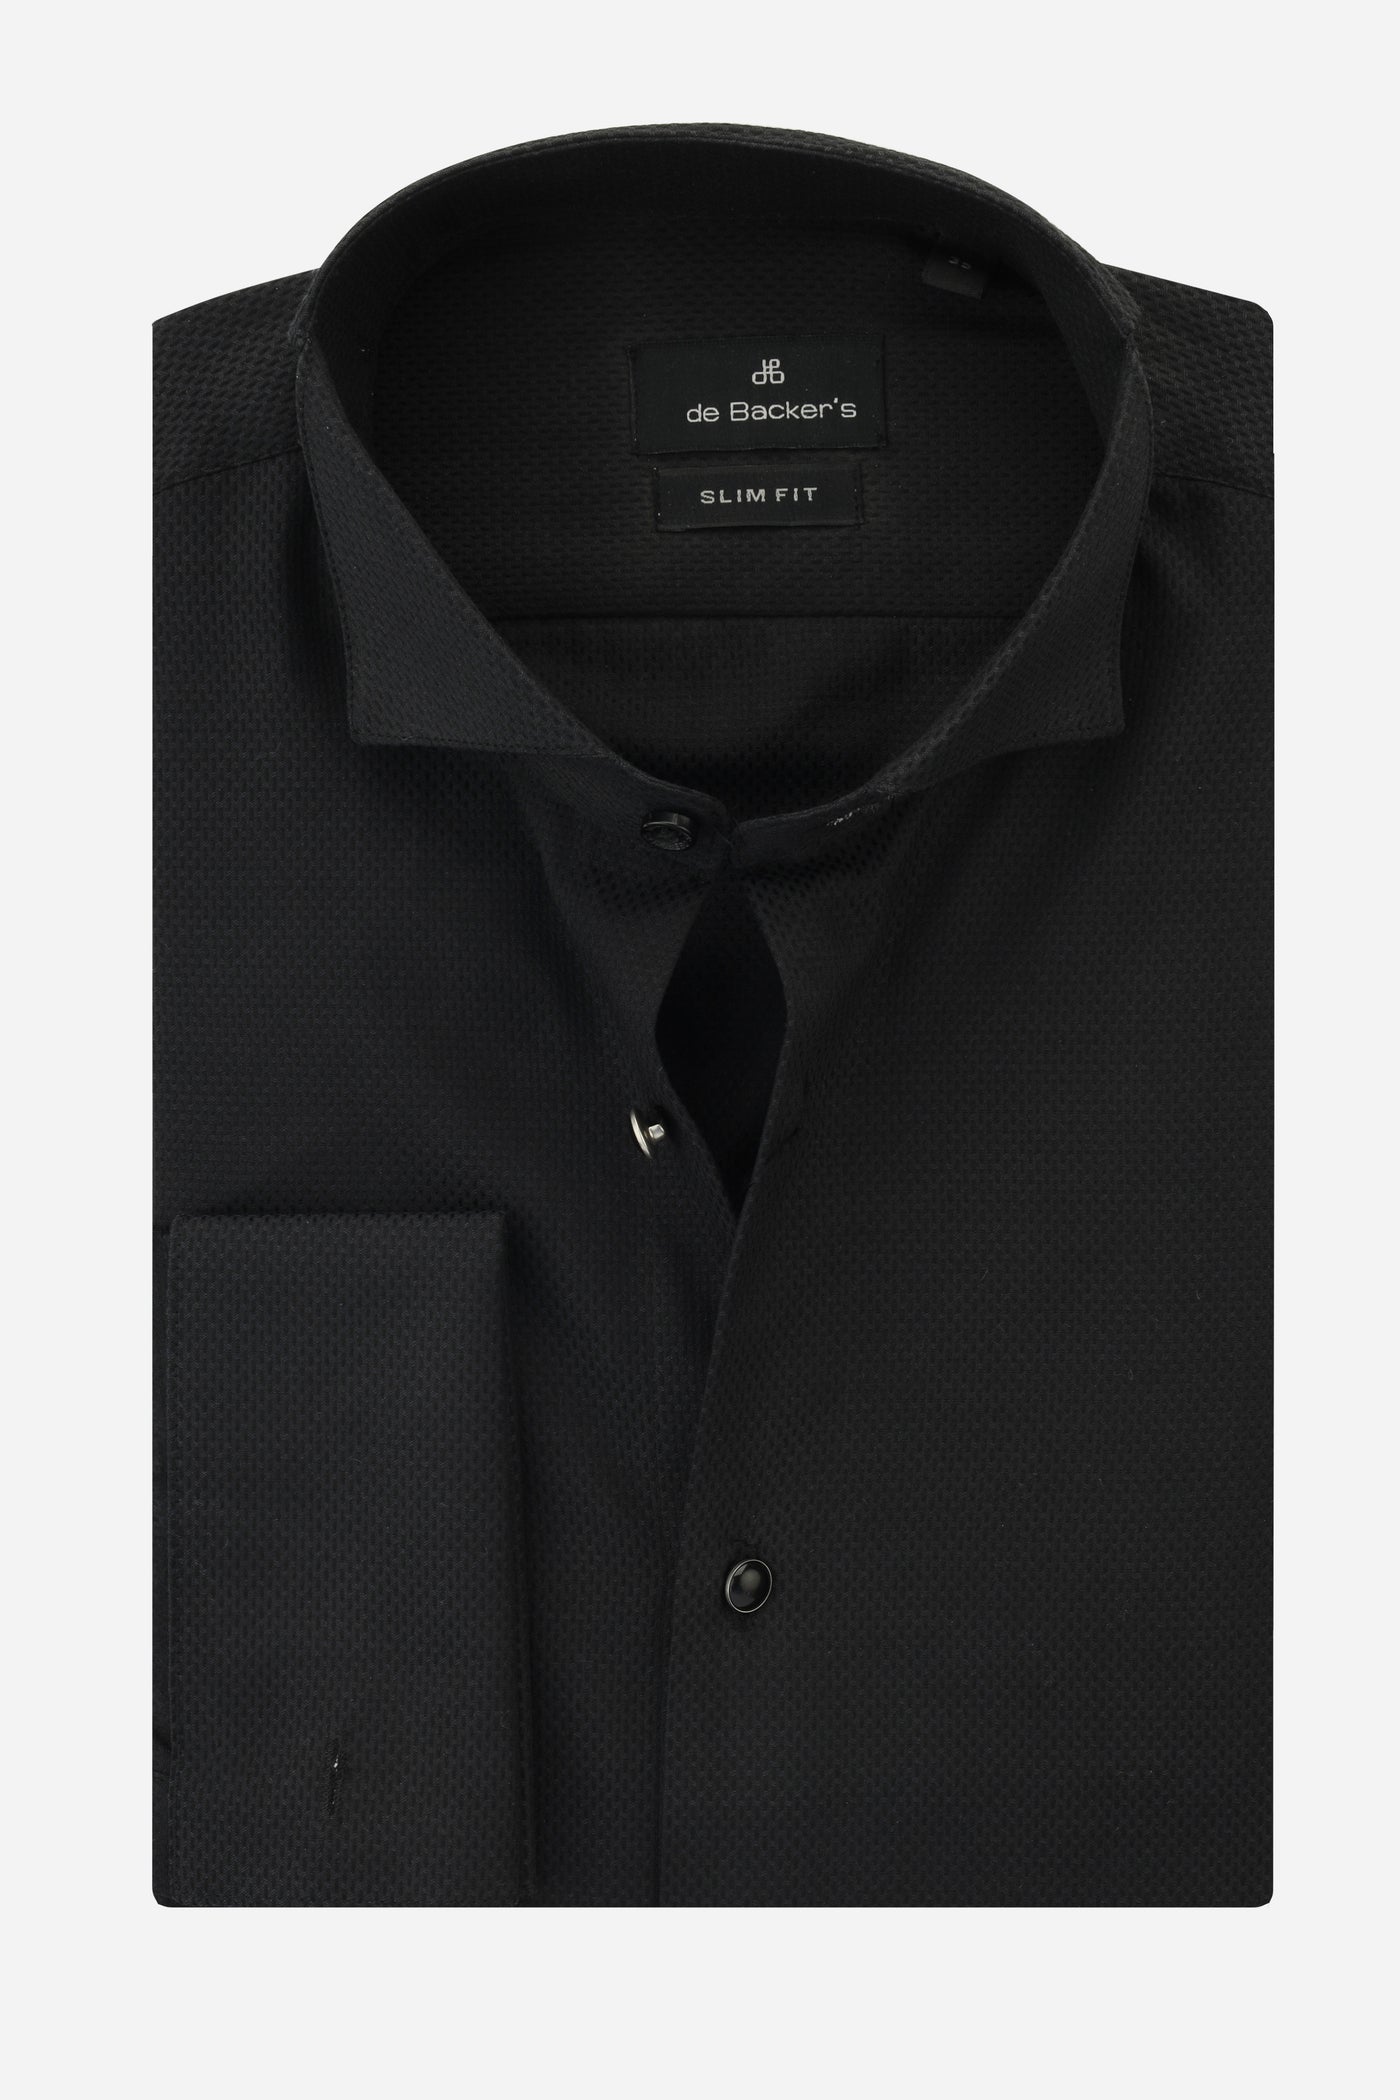 Jacquard Black Wingtip Shirt